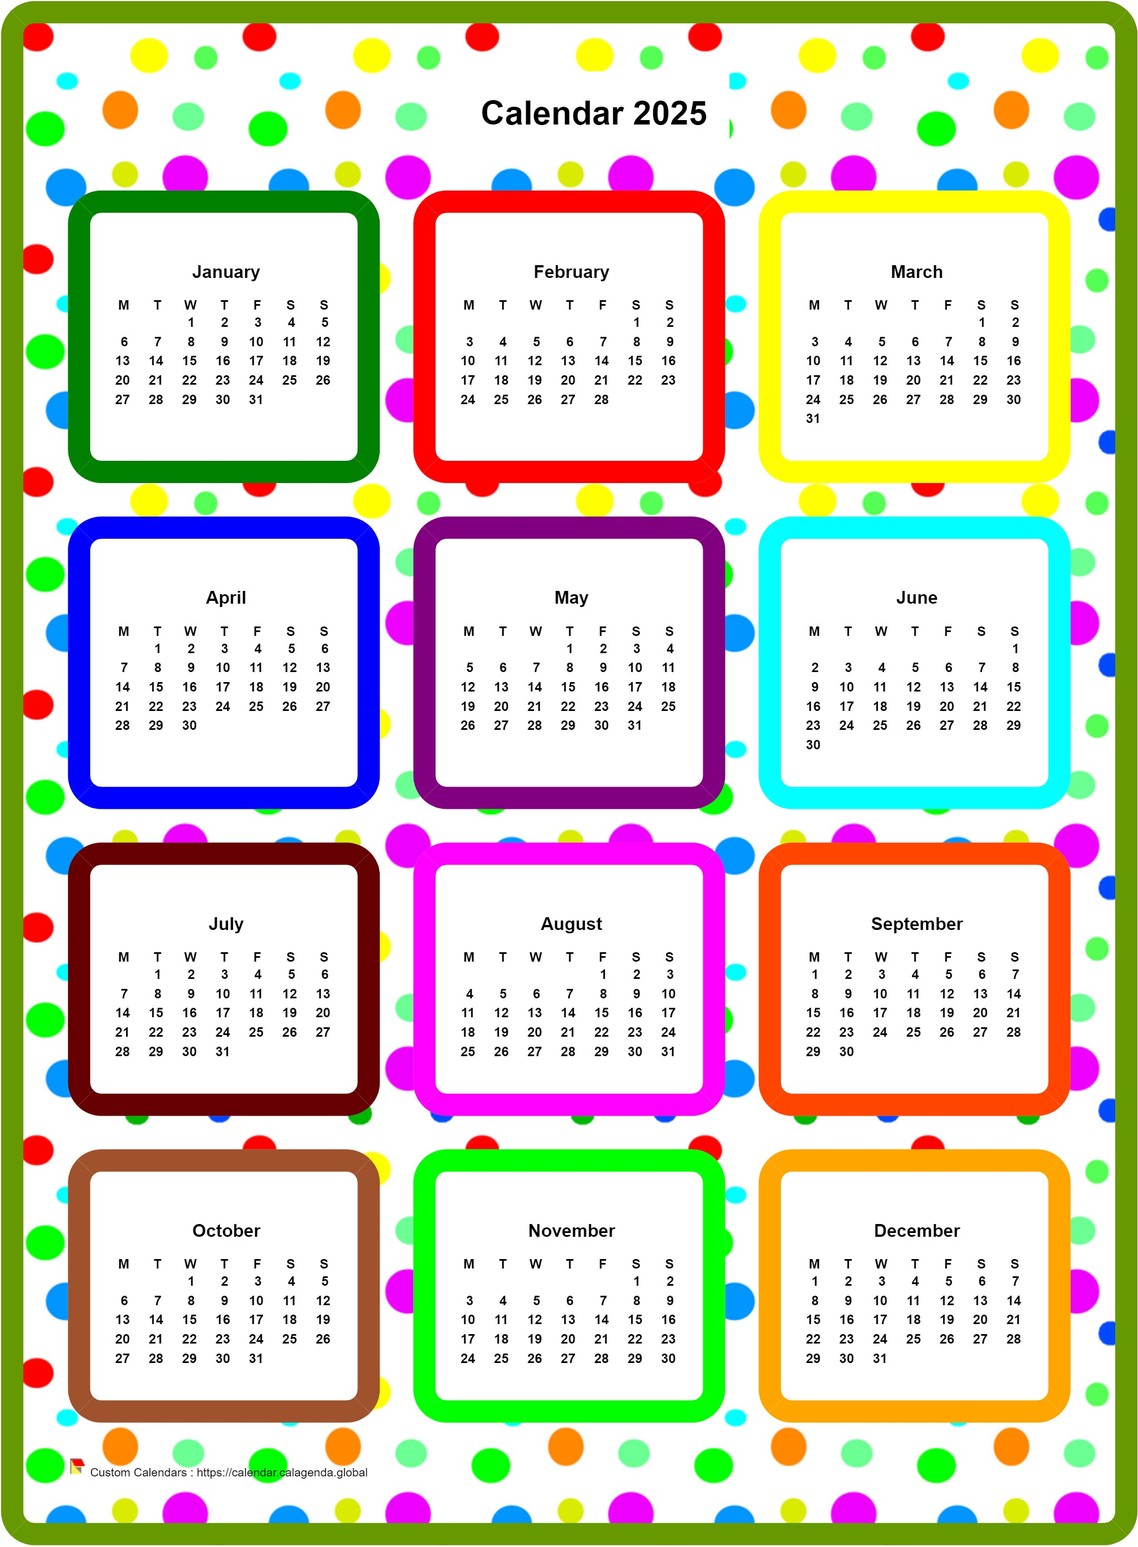 Calendar 2025 annual colored